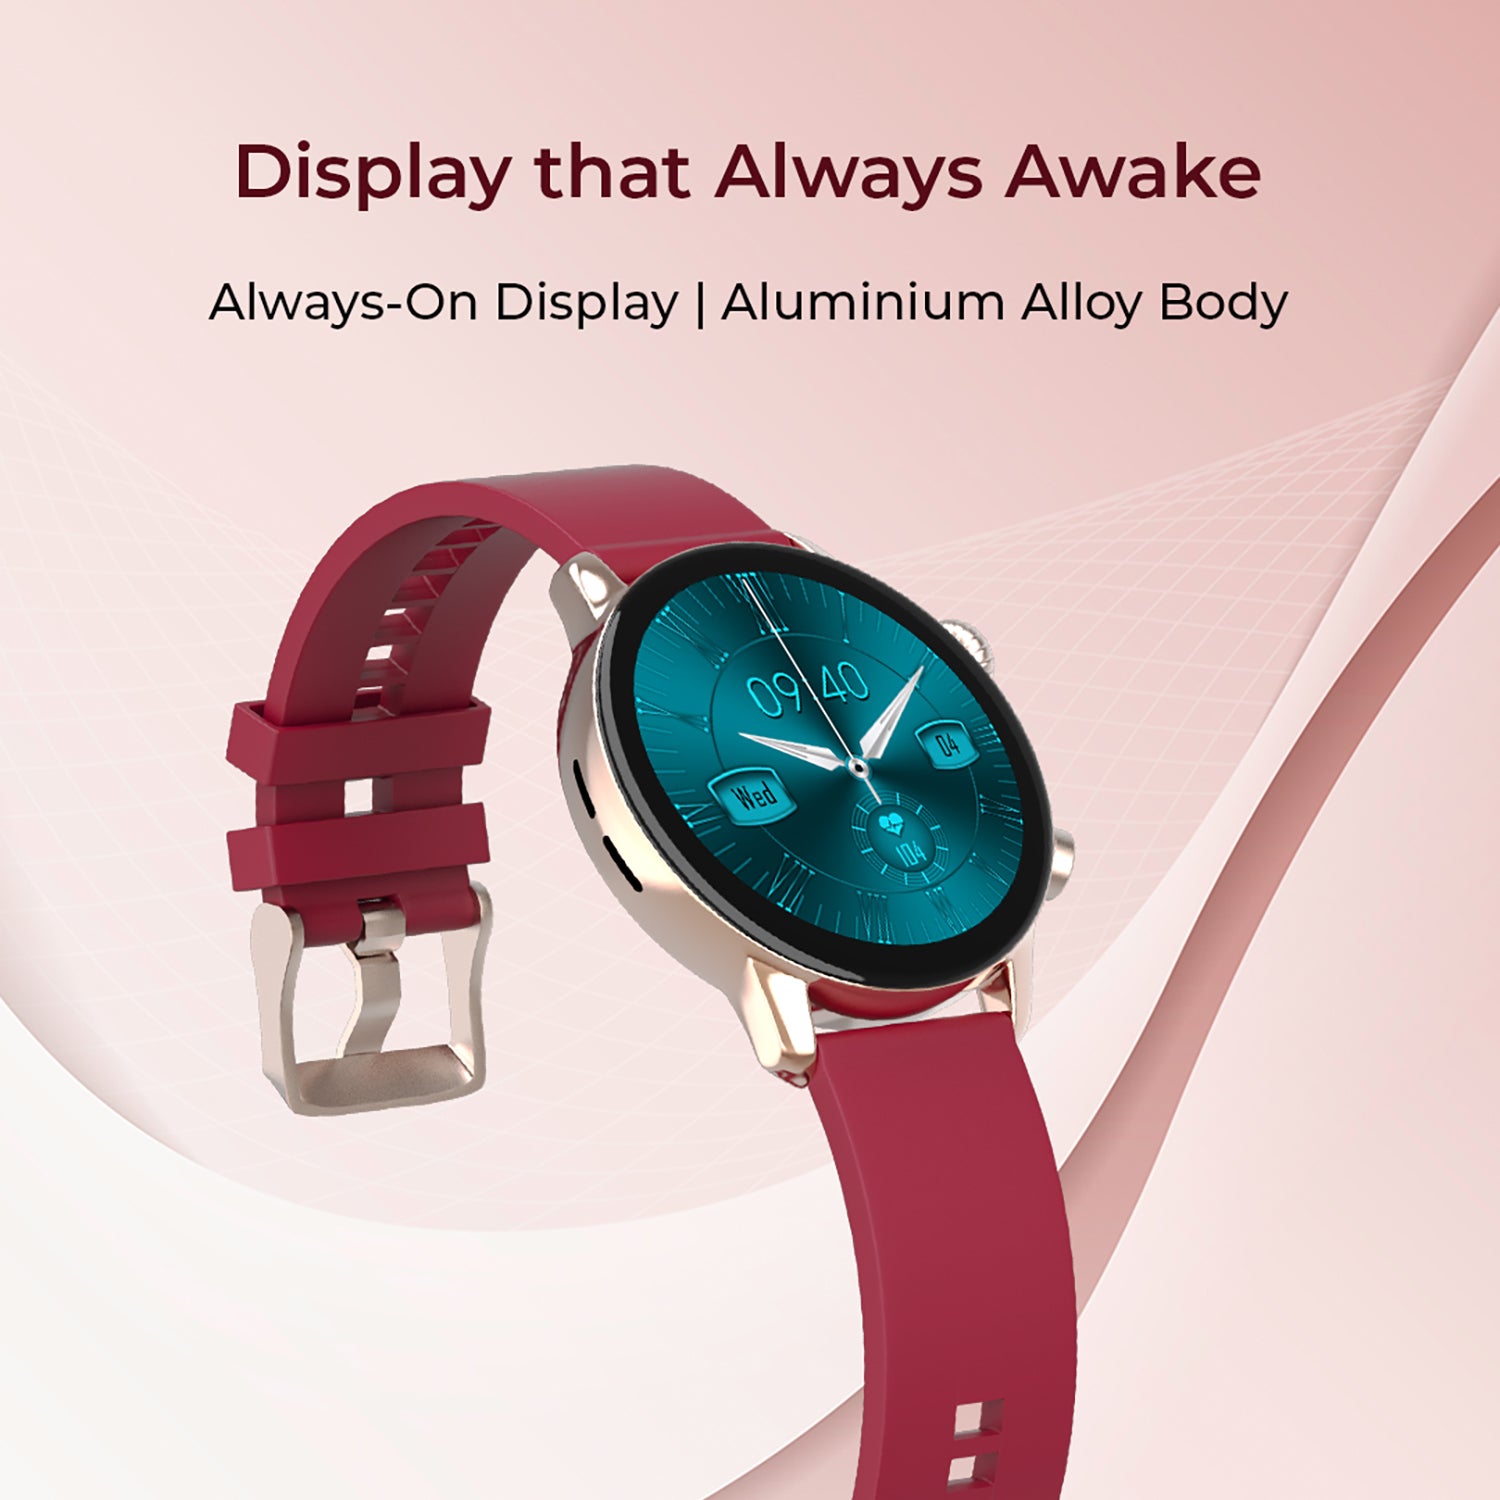 GIZMORE Glow AMOLED with 3.4 Cm | Always-ON | 550 NITS Brightness | BT Calling Smartwatch